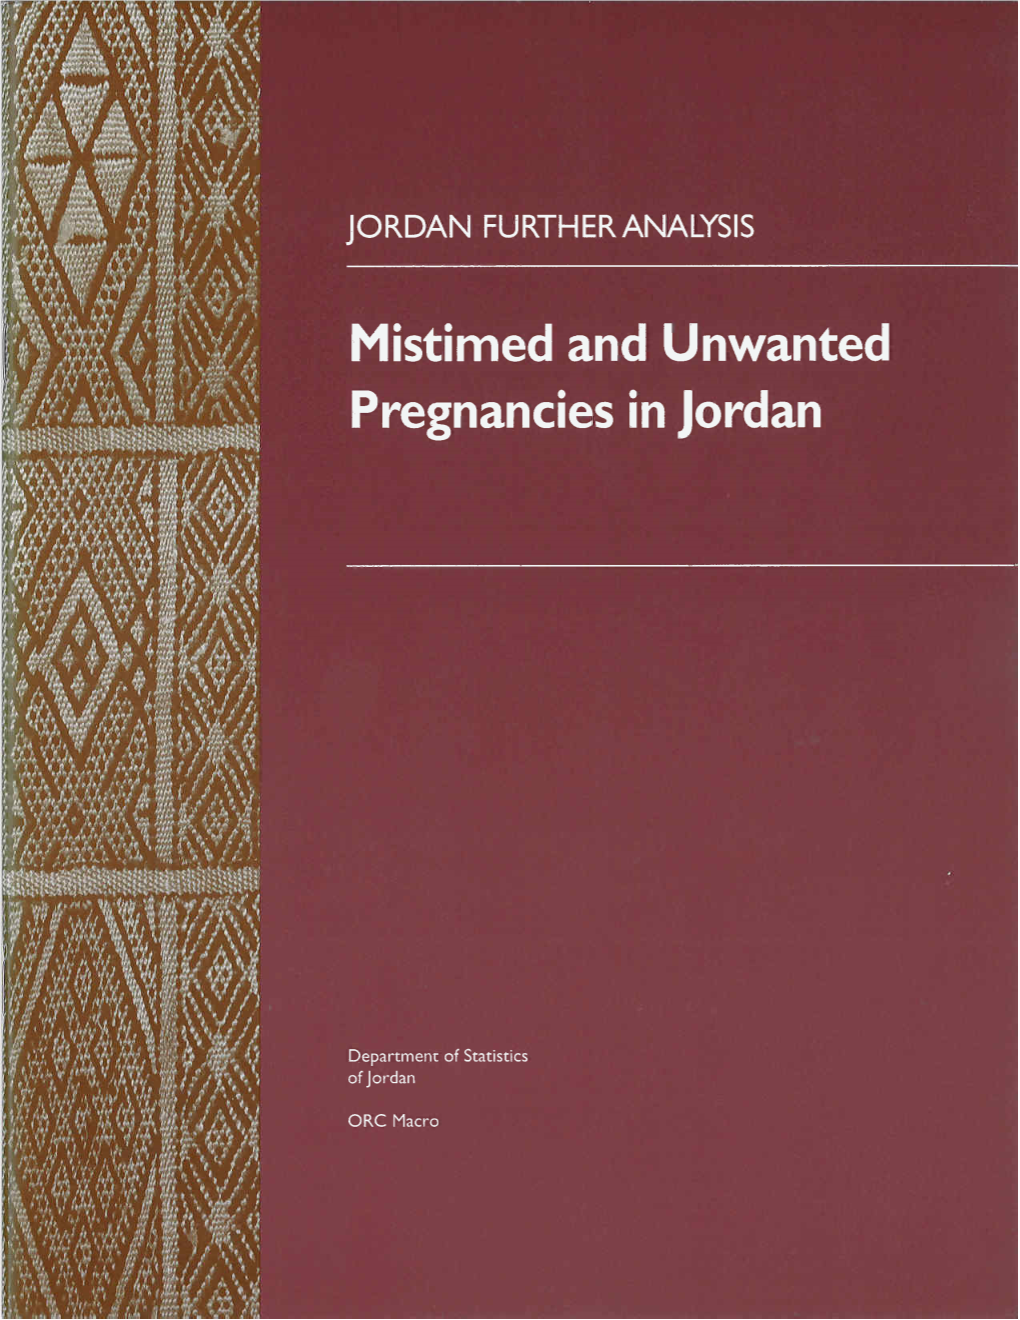 Mistimed and Unwanted Pregnancies in Jordan